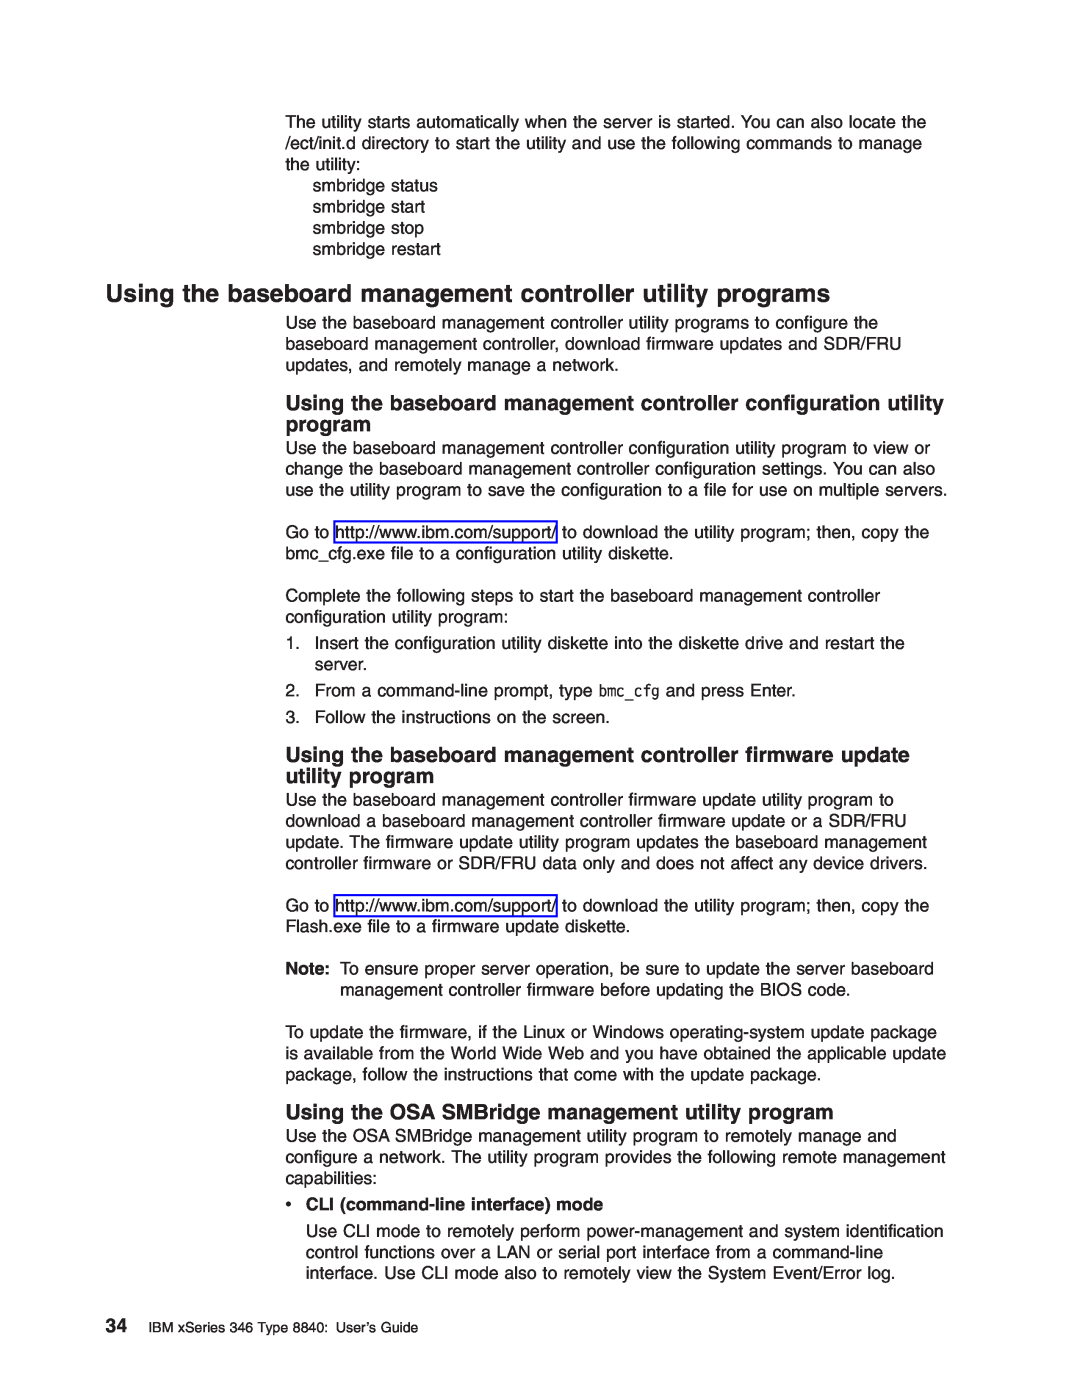 IBM 8840 manual Using the baseboard management controller utility programs 